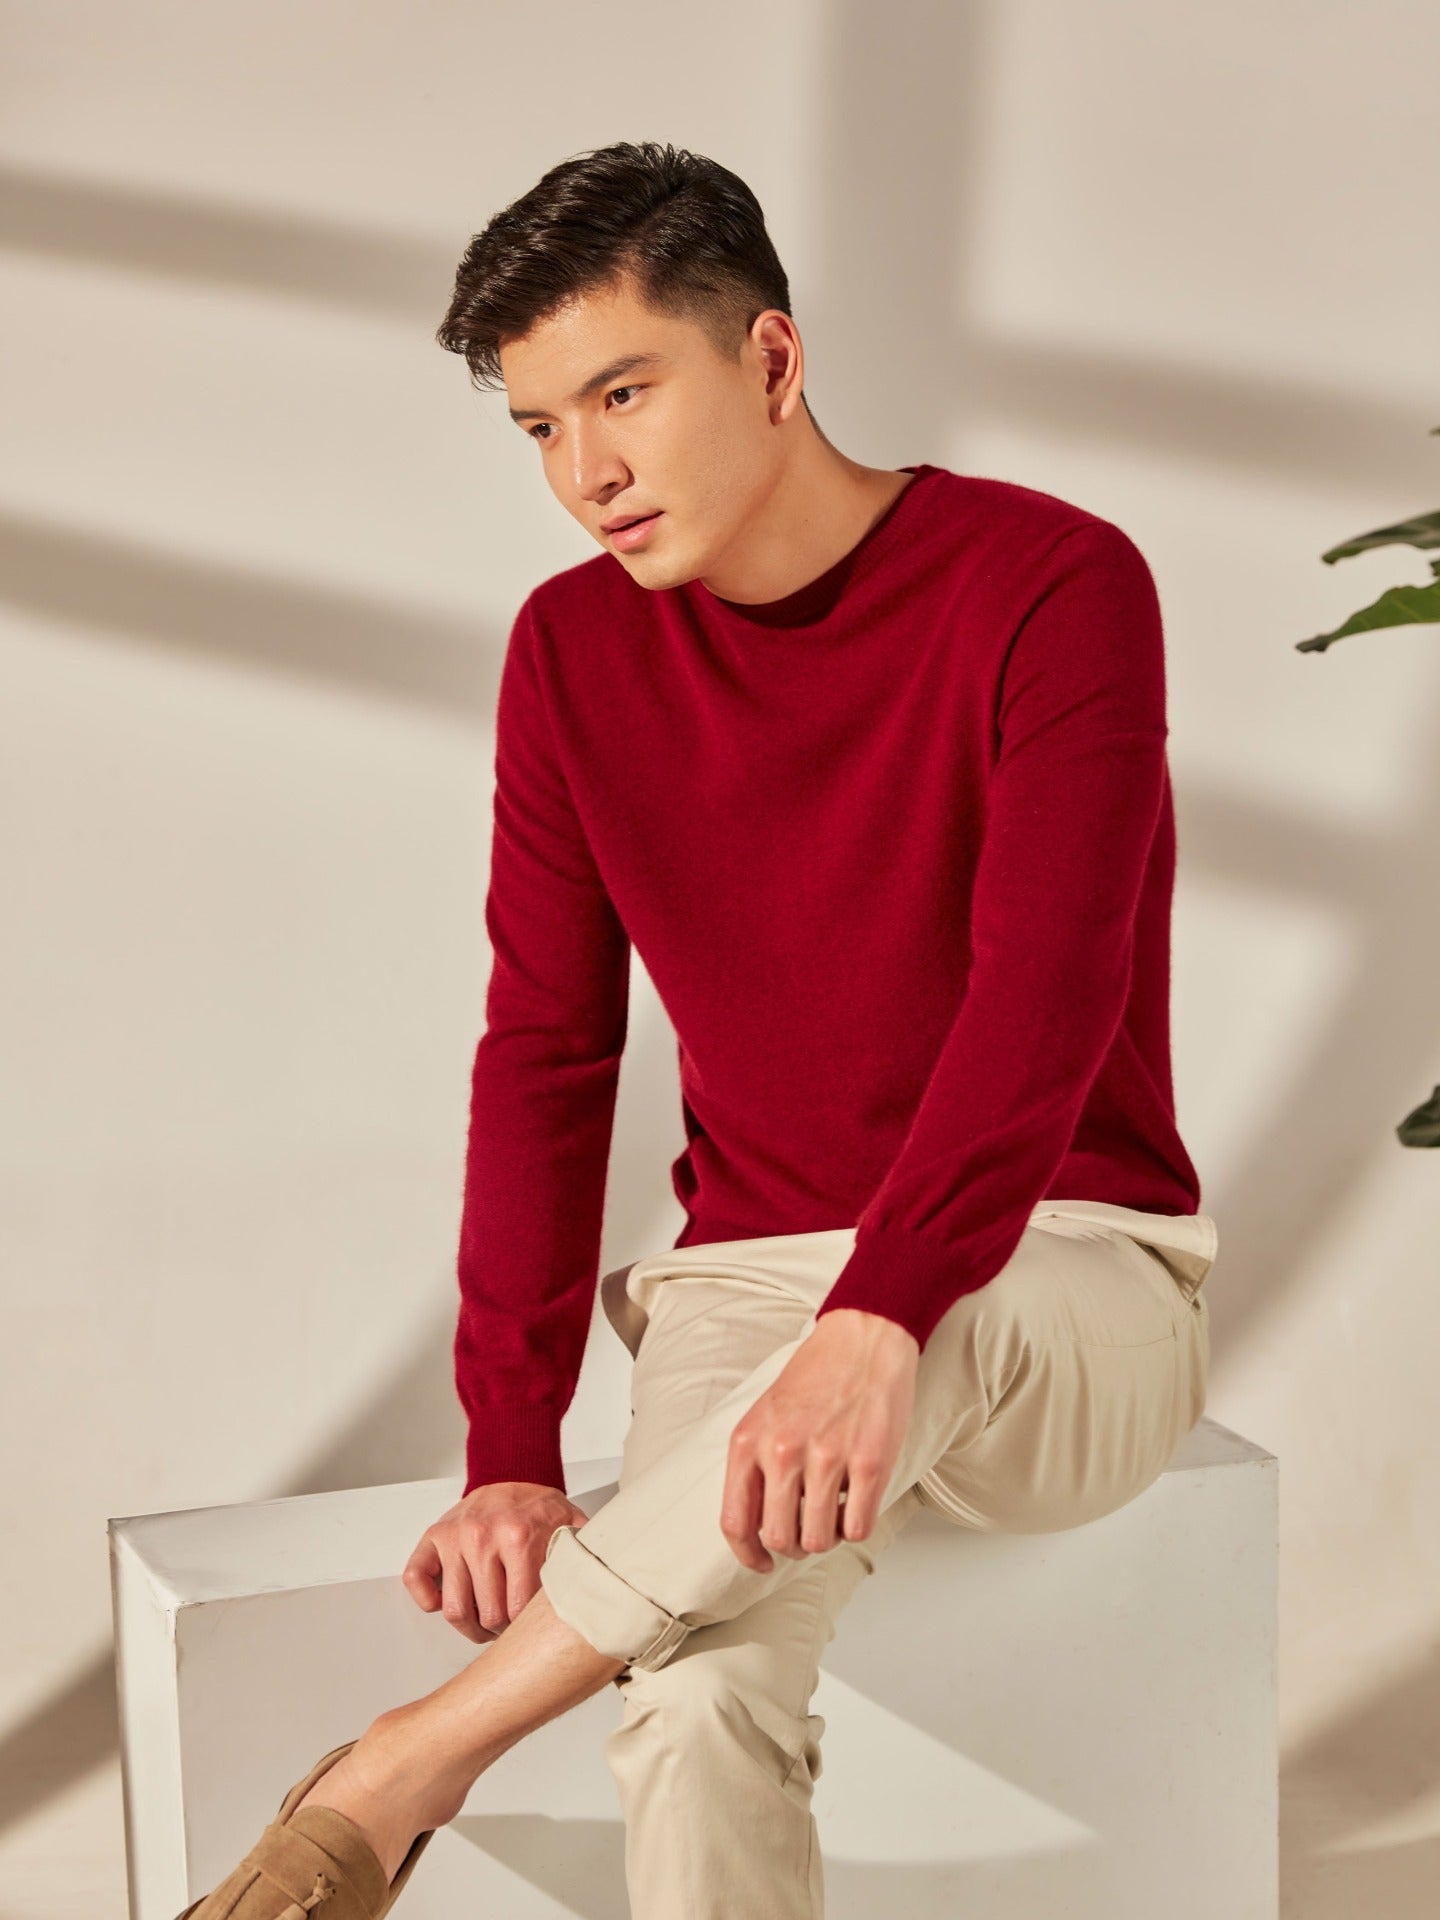 Men's Cashmere Round Neck Sweater Taupe - Gobi Cashmere